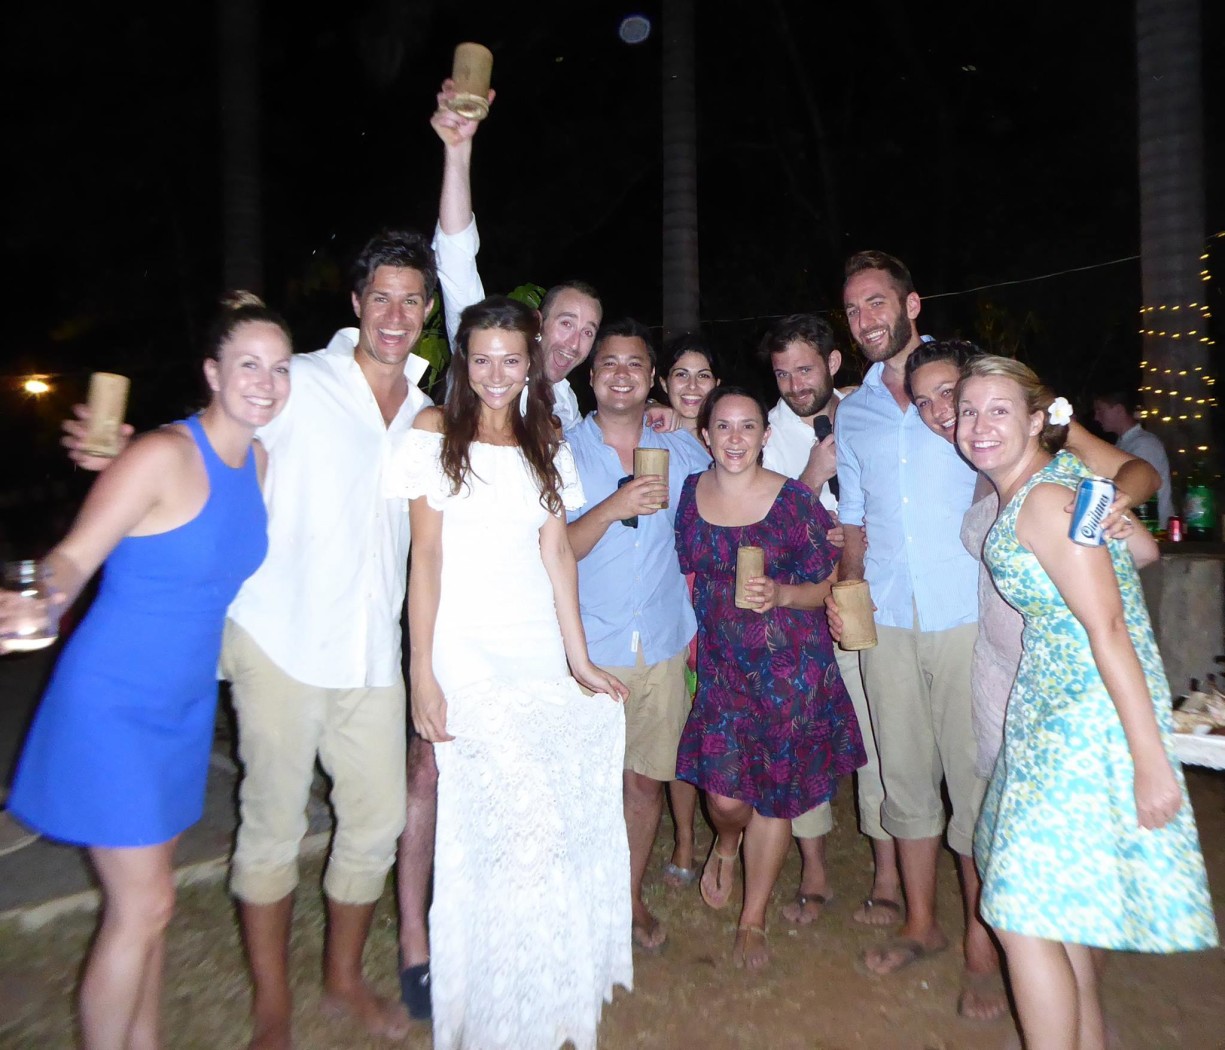 Oksana and Australian friends at the wedding. Costa Rica